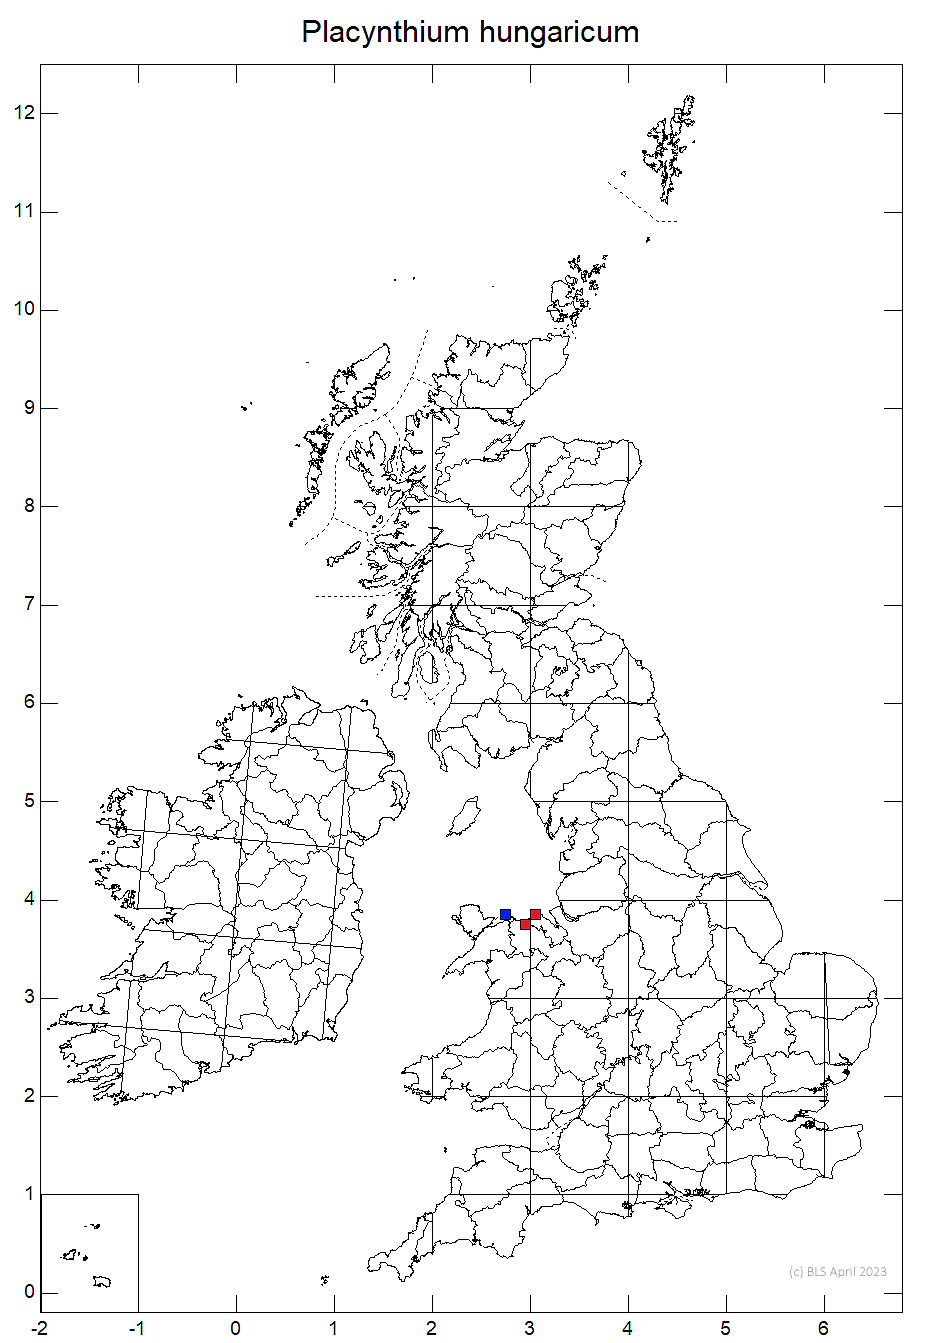 Placynthium hungaricum 10km sq distribution map